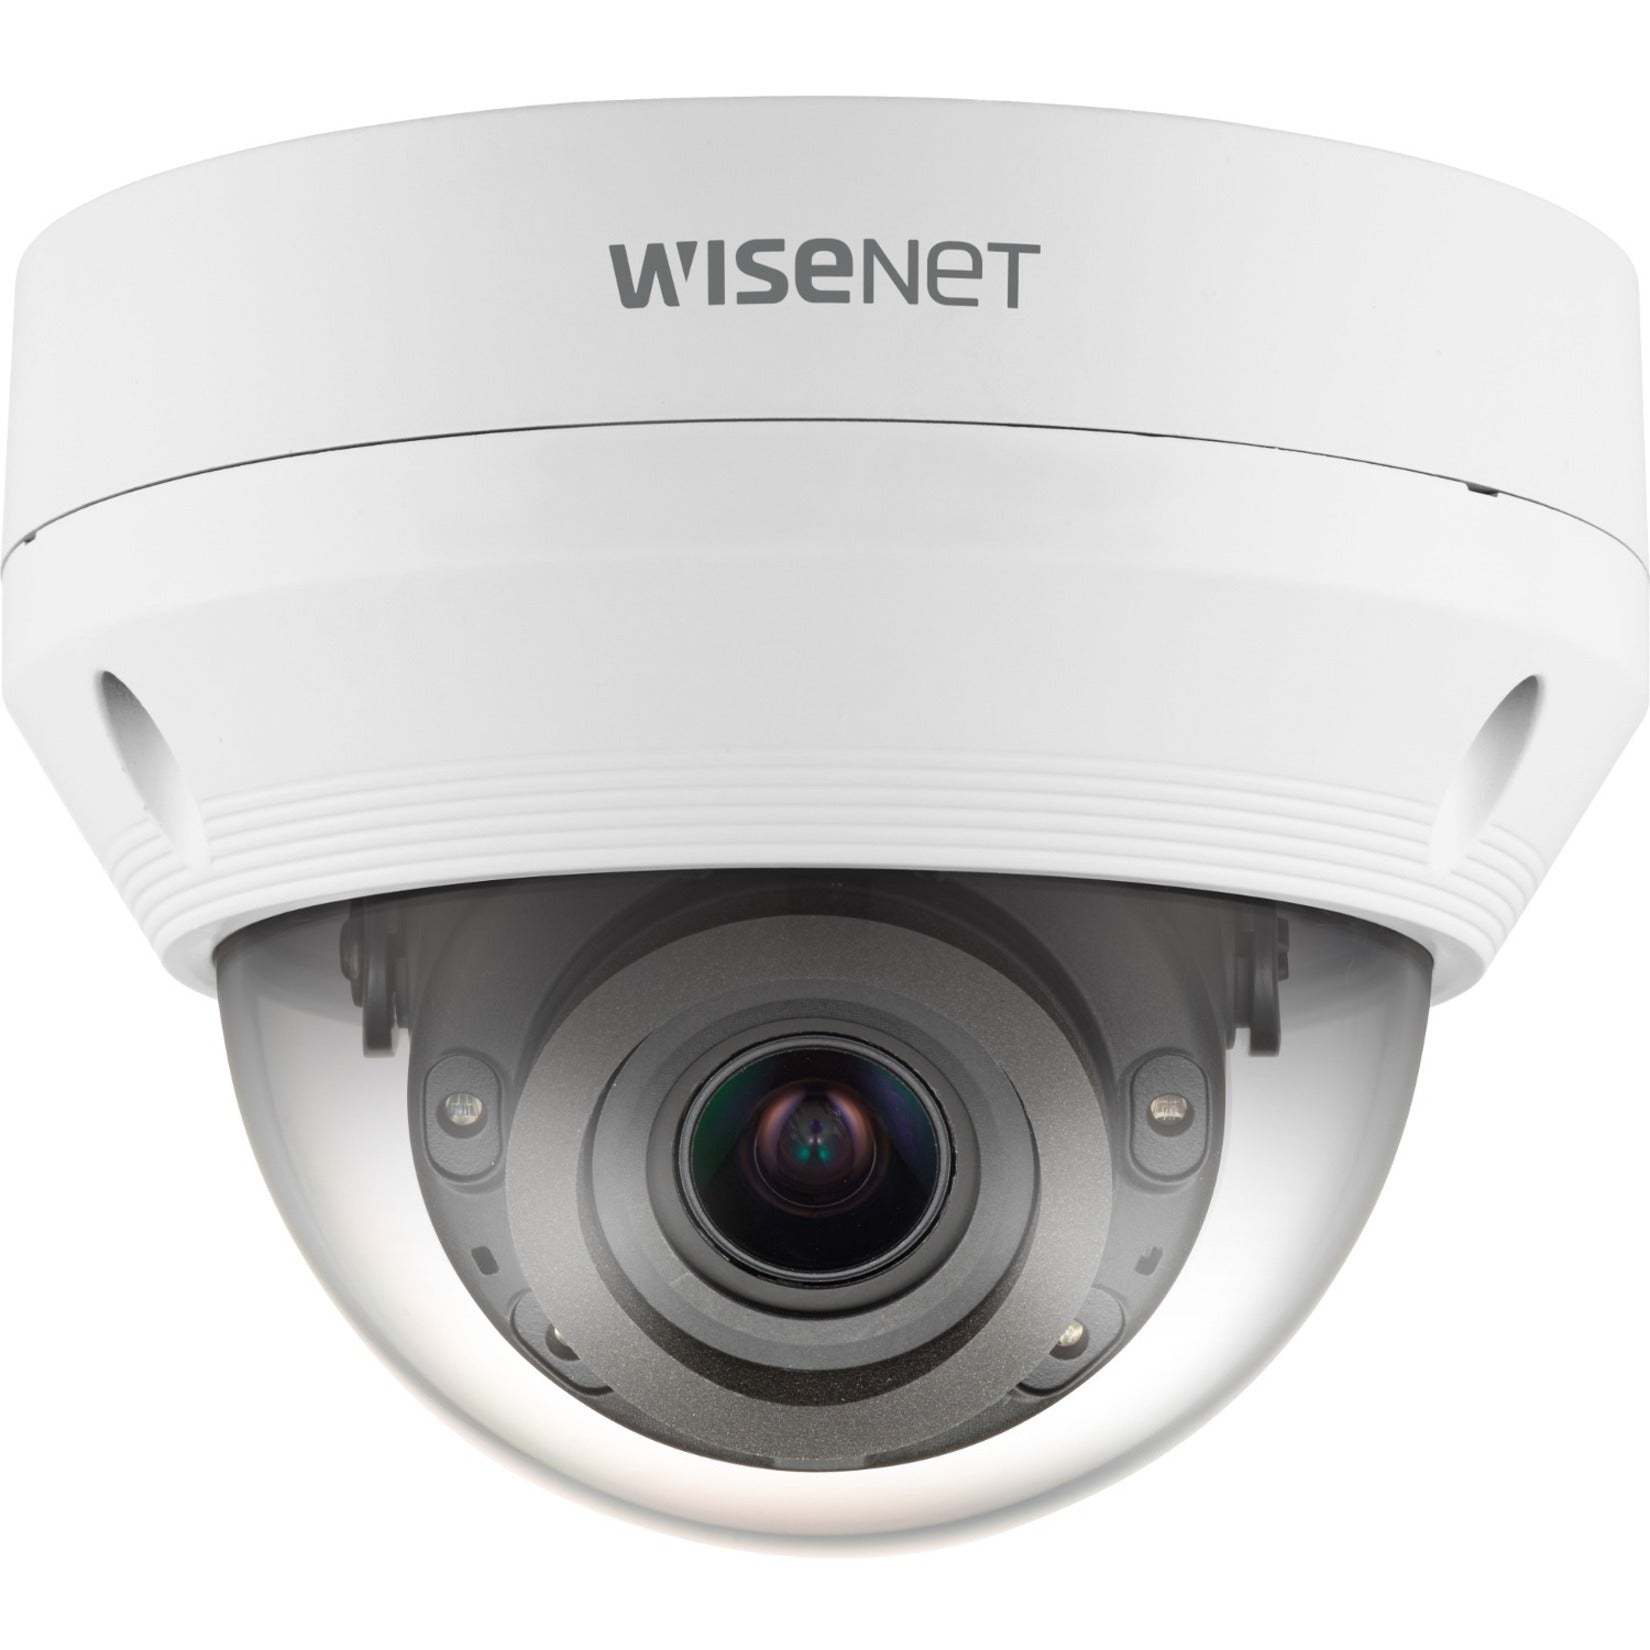 Wisenet QNV-8080R 5M H.265 NW IR Dome Camera, 5 Megapixel HD, 3.1x Zoom, IP66, IK10